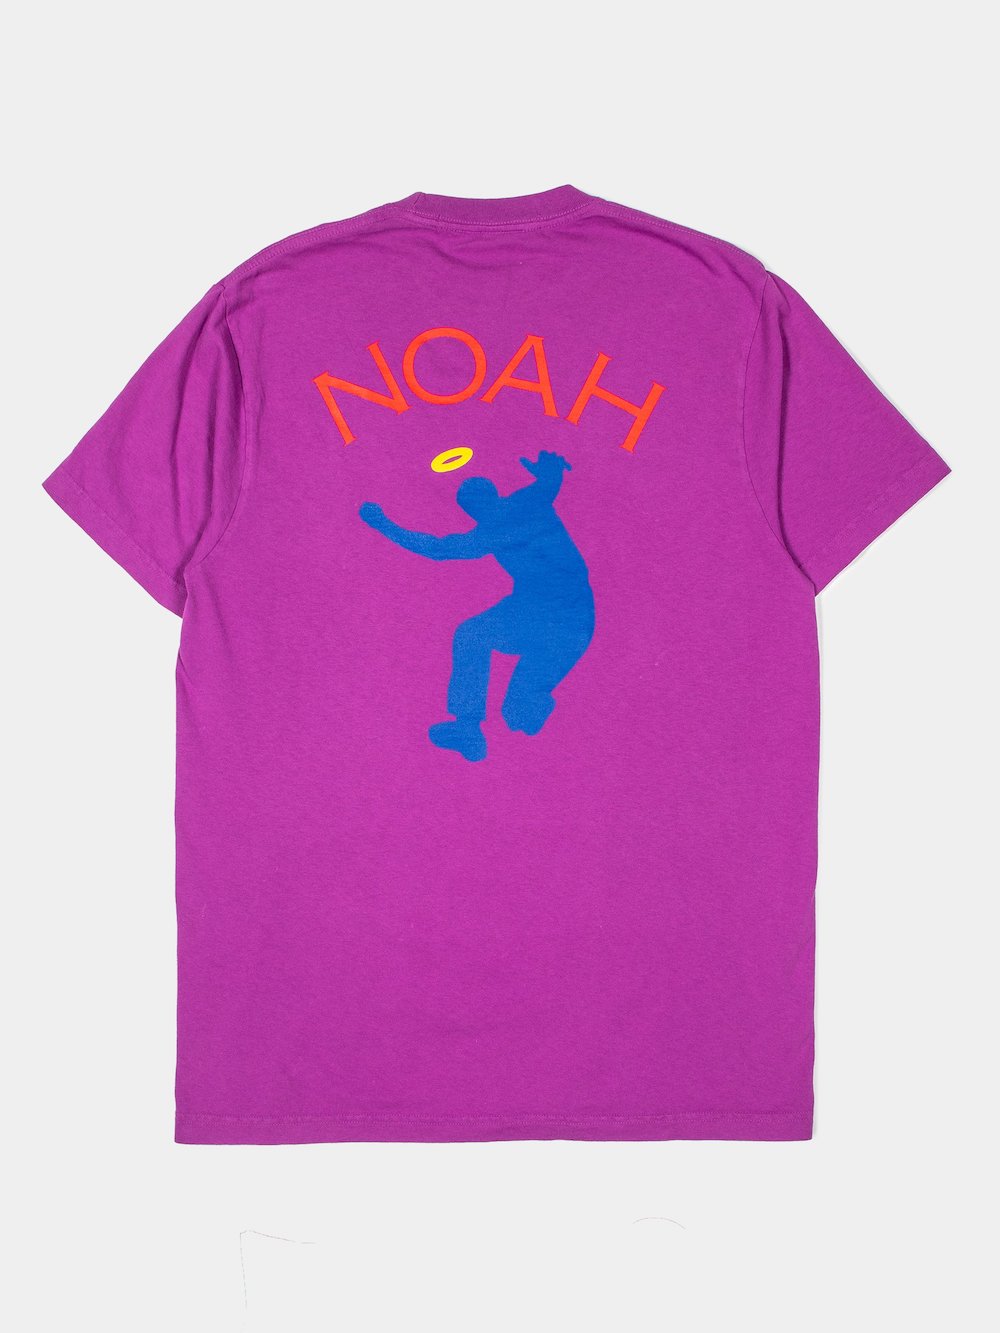 Noah x Union Big Logo Lock Up T-shirt